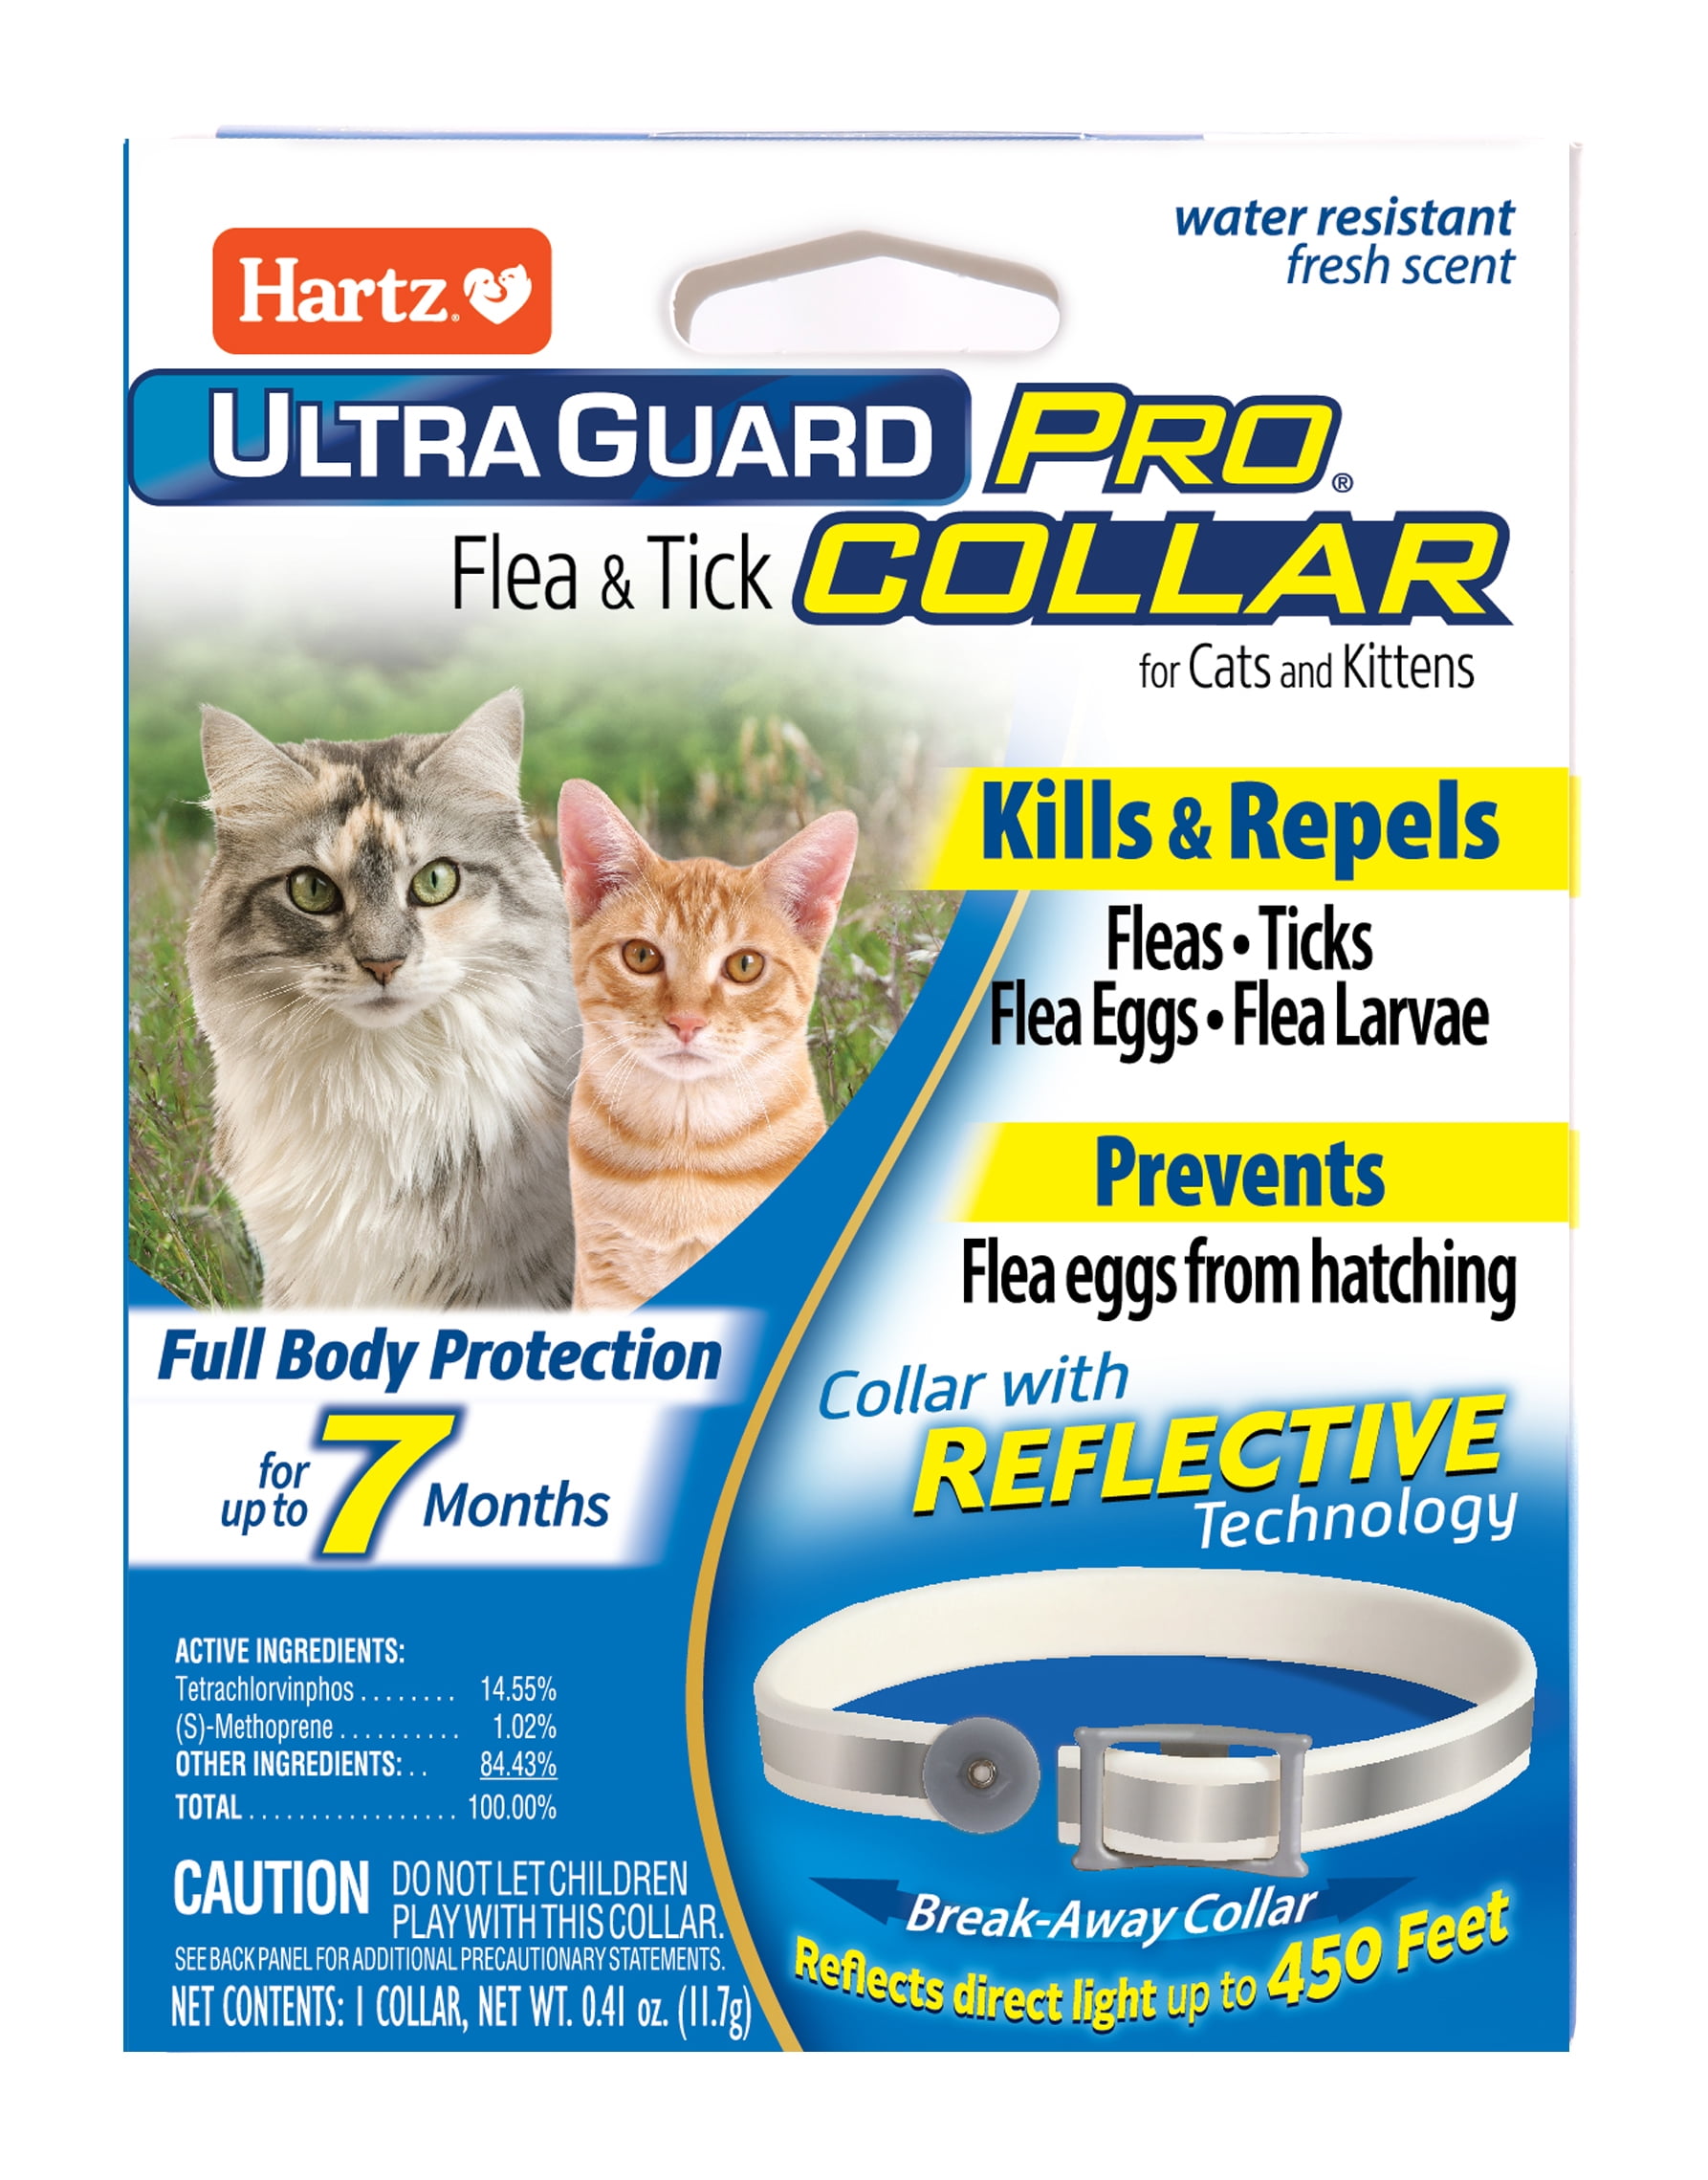 VRS Stay Positive Cat Kitty Kitten Adoption Paw Print Car Decal Metal Sticker